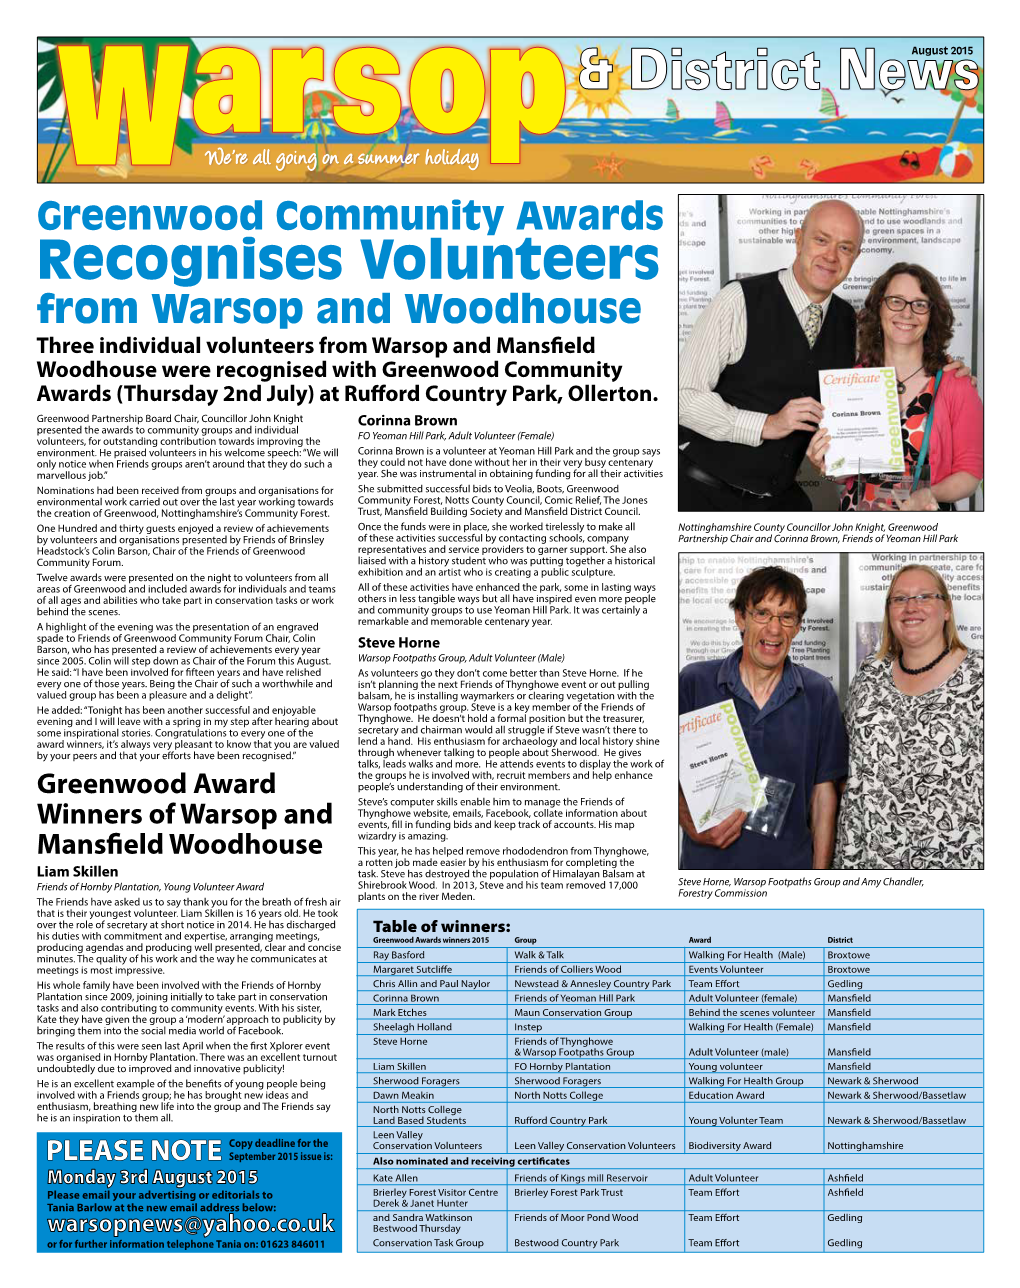 Greenwood Award Winners of Warsop And